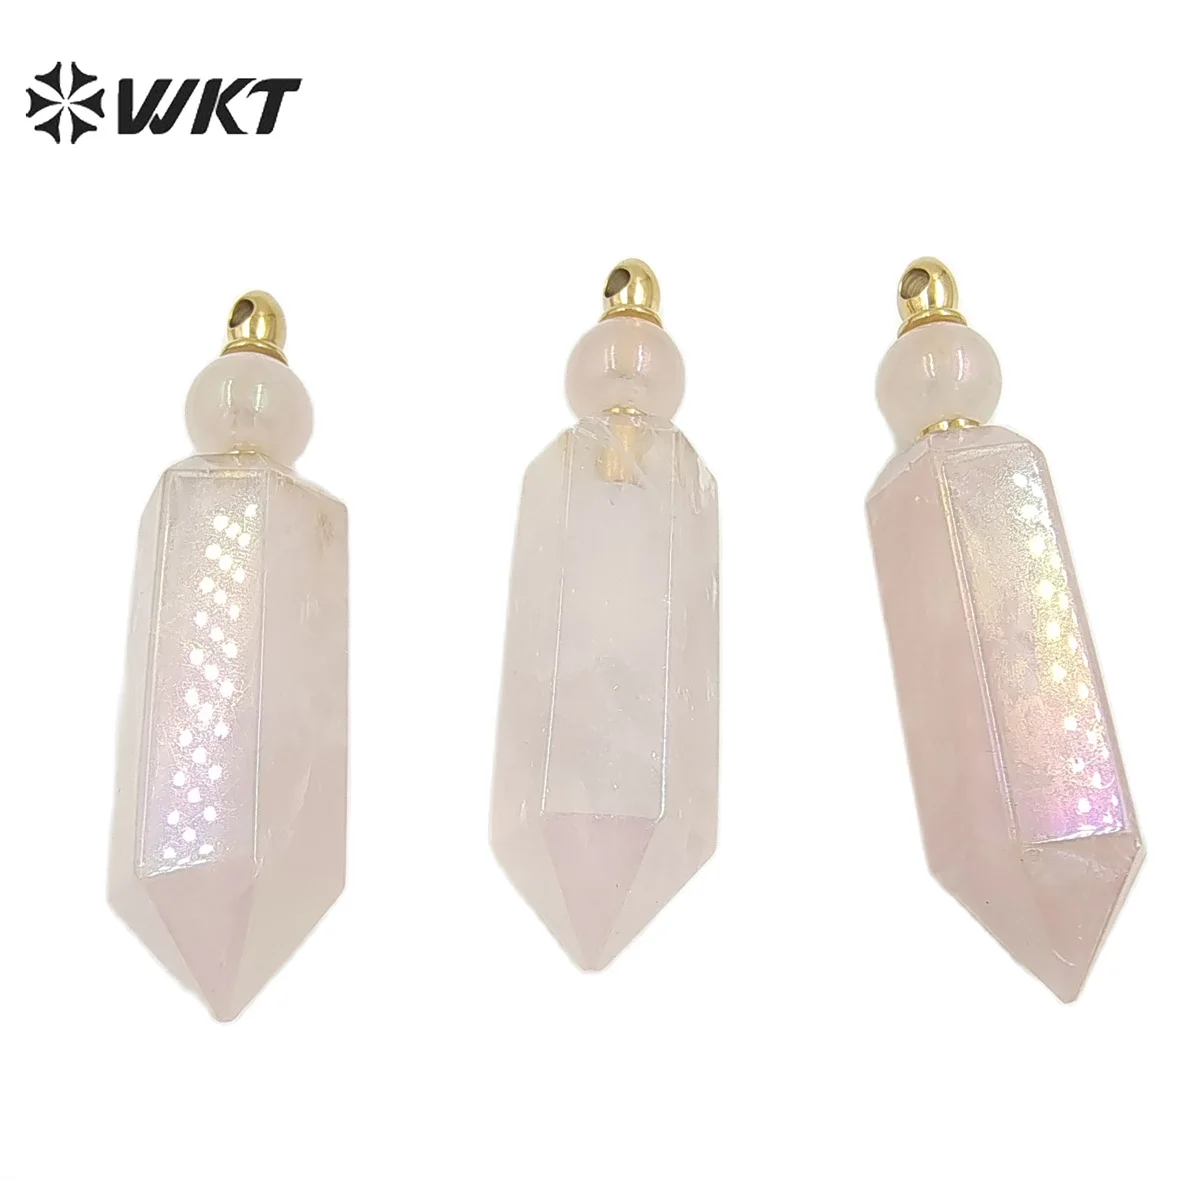 WT-P1788 WKT 2022 sweet style Natural pink quartz with Aura Pendant simple Pendant for wedding gift perfume bottle women